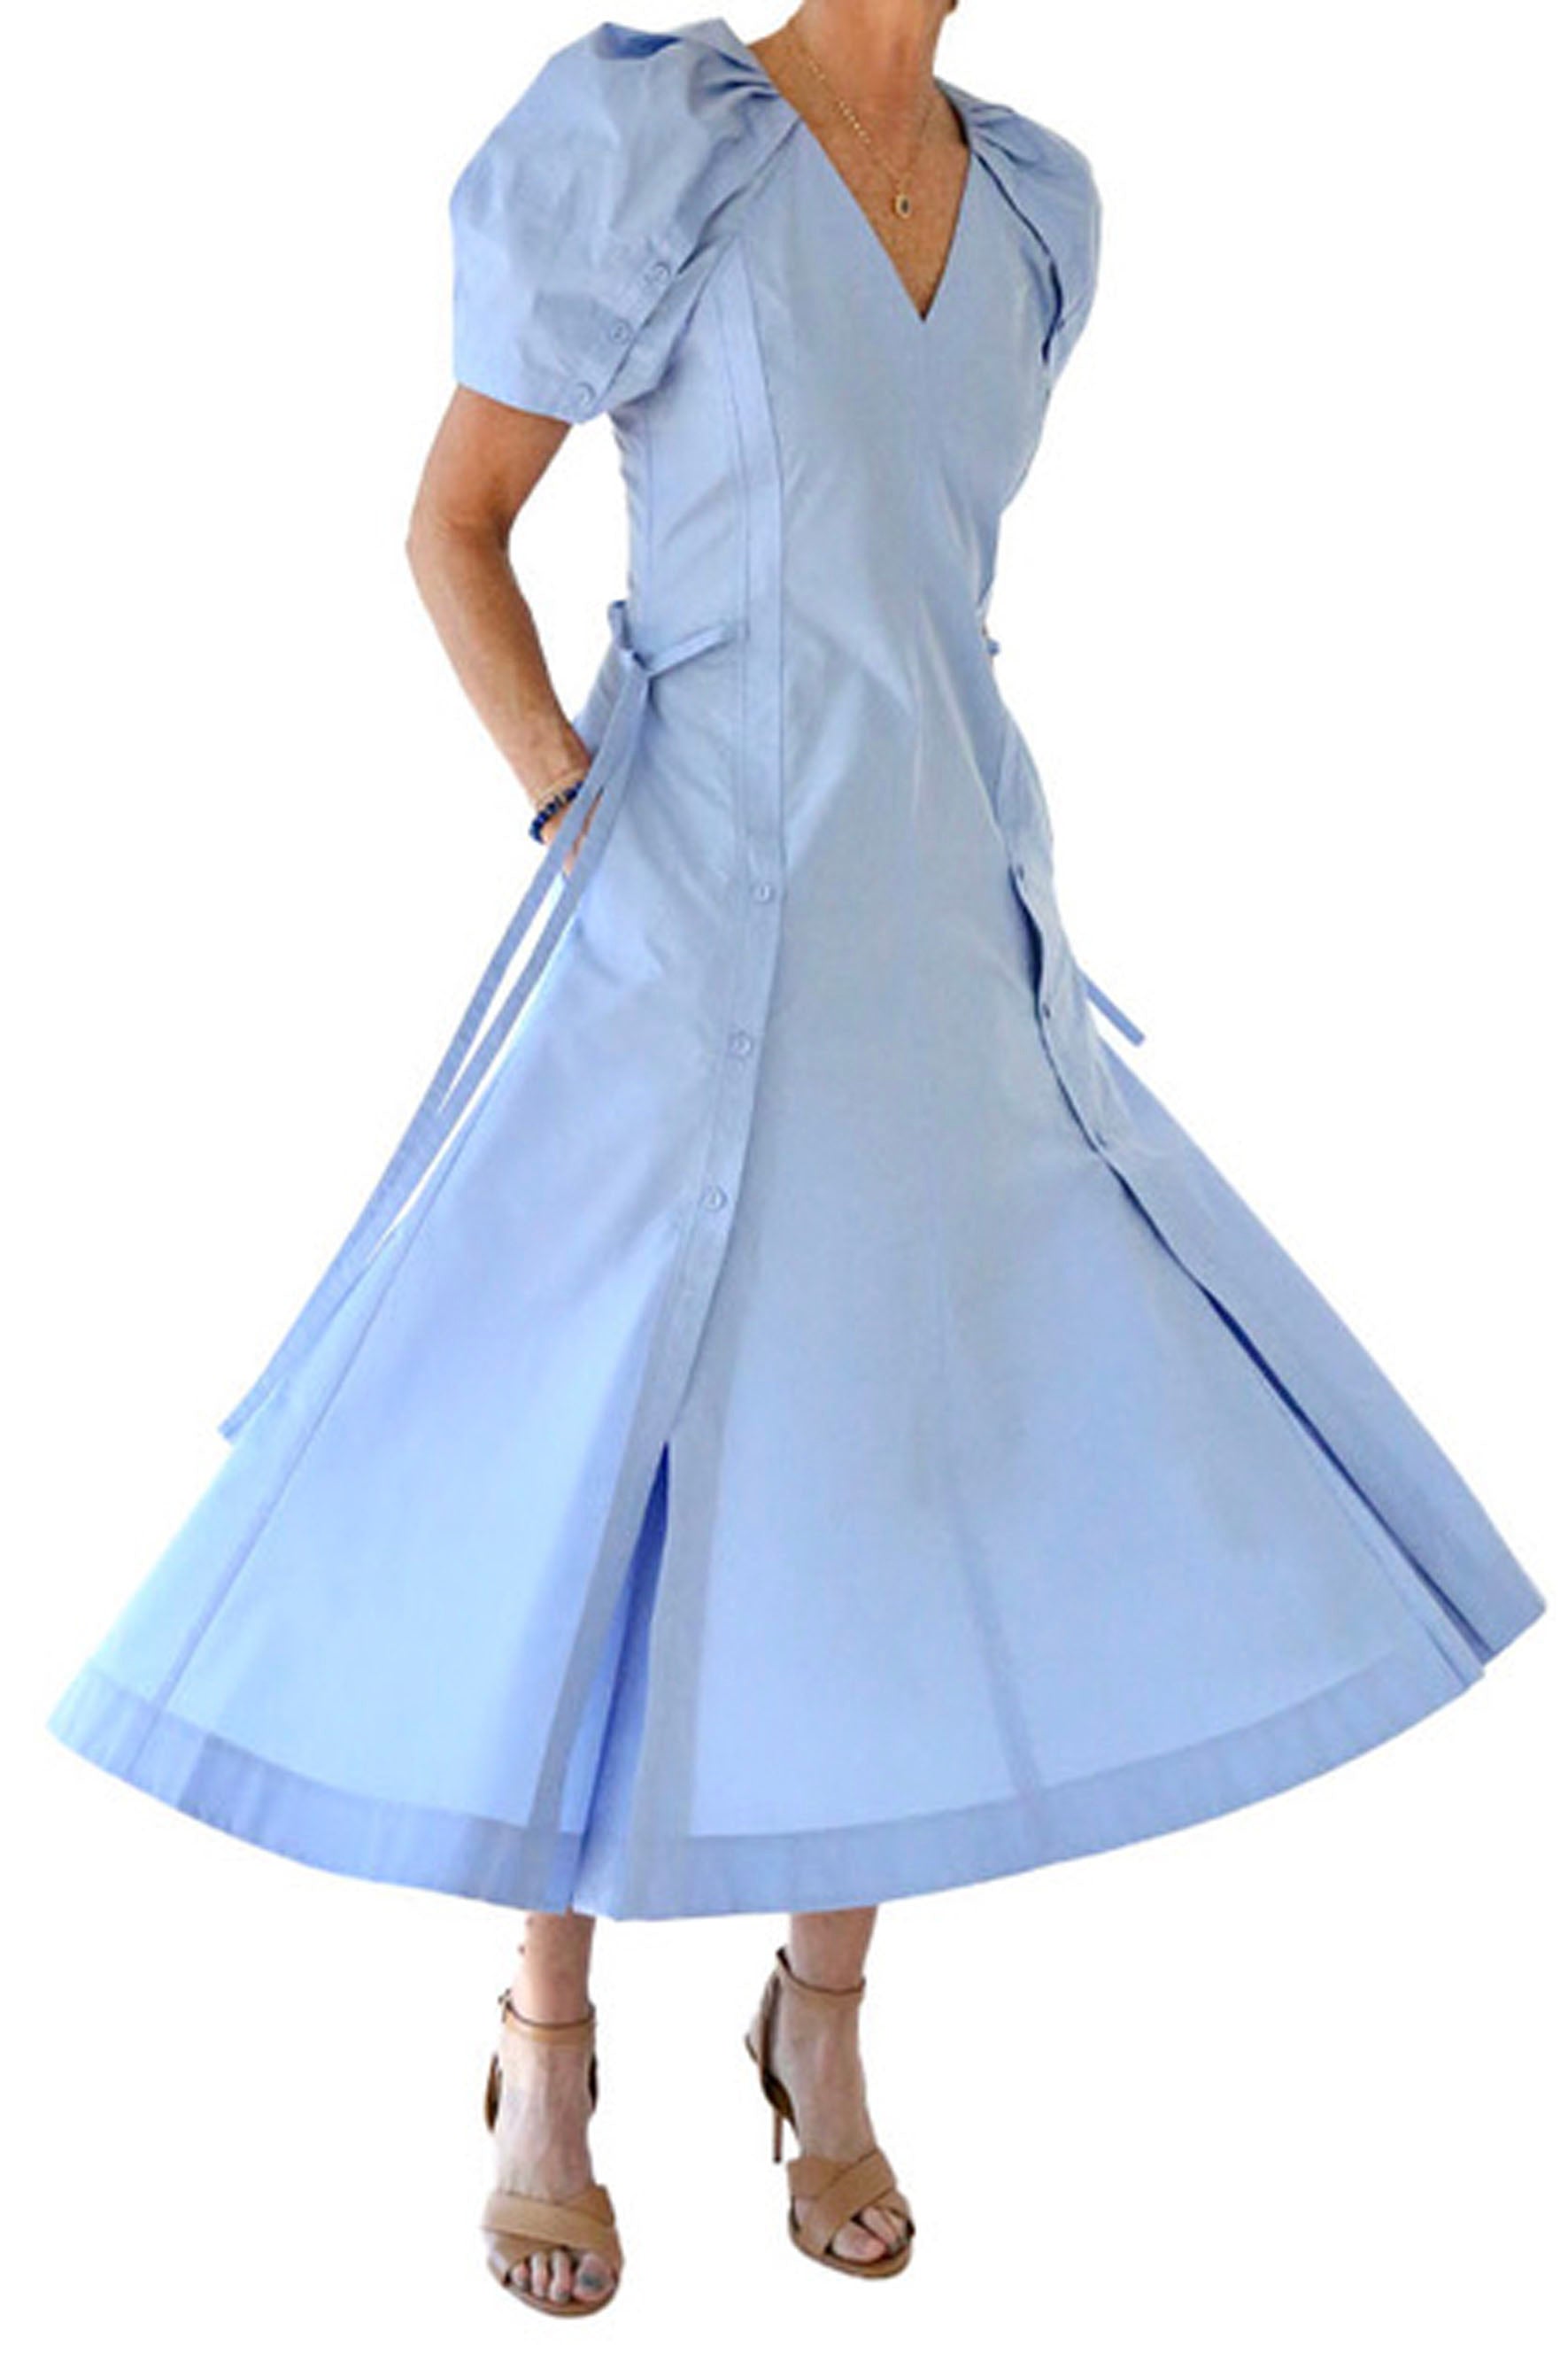 bloom sleeve dress w/button placket - oxford blue